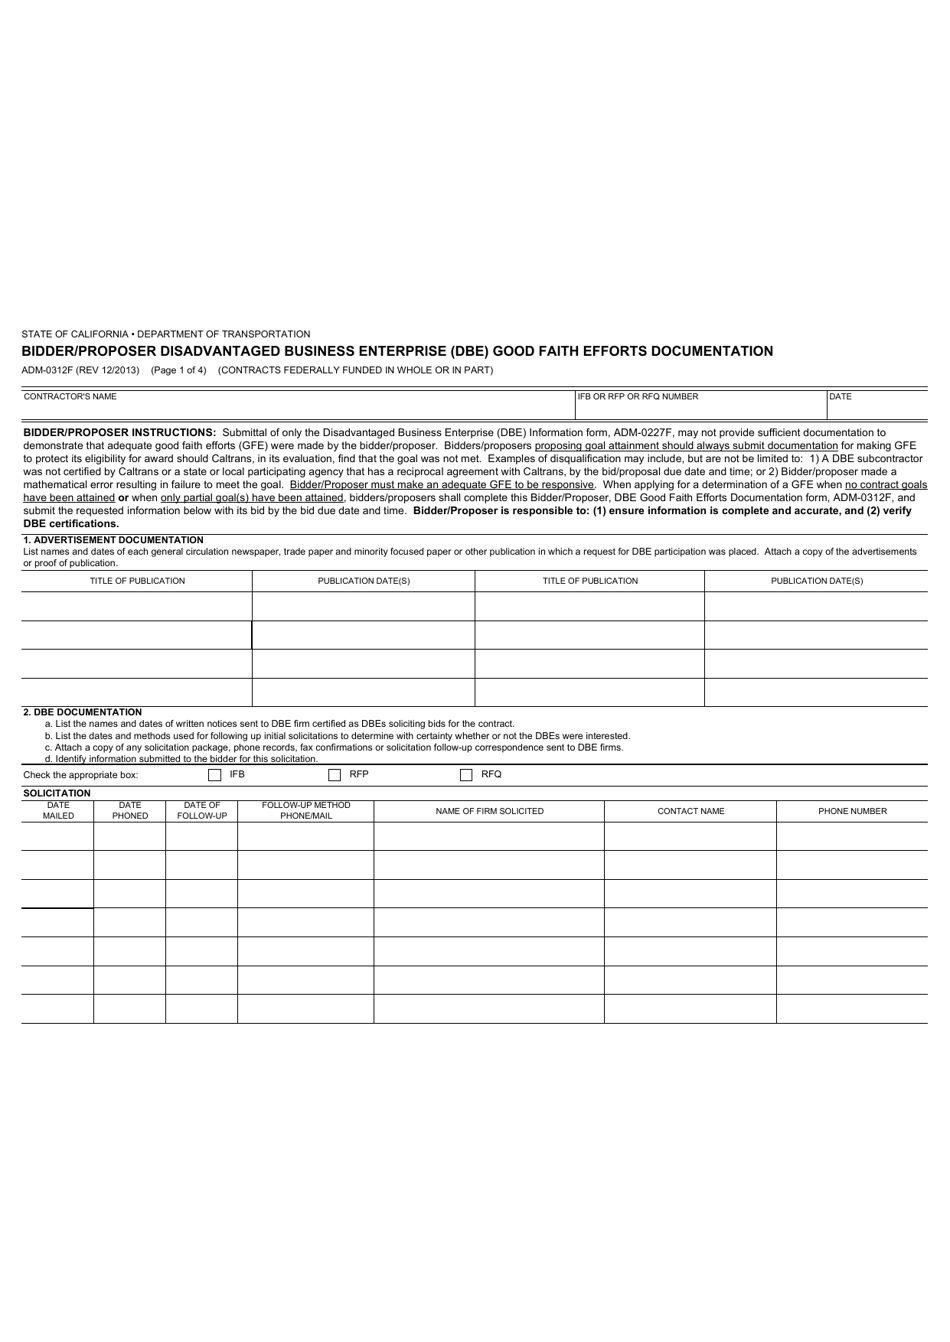 Form ADM-0312F Bidder / Proposer Disadvantaged Business Enterprise (Dbe) Good Faith Efforts Documentation - California, Page 1